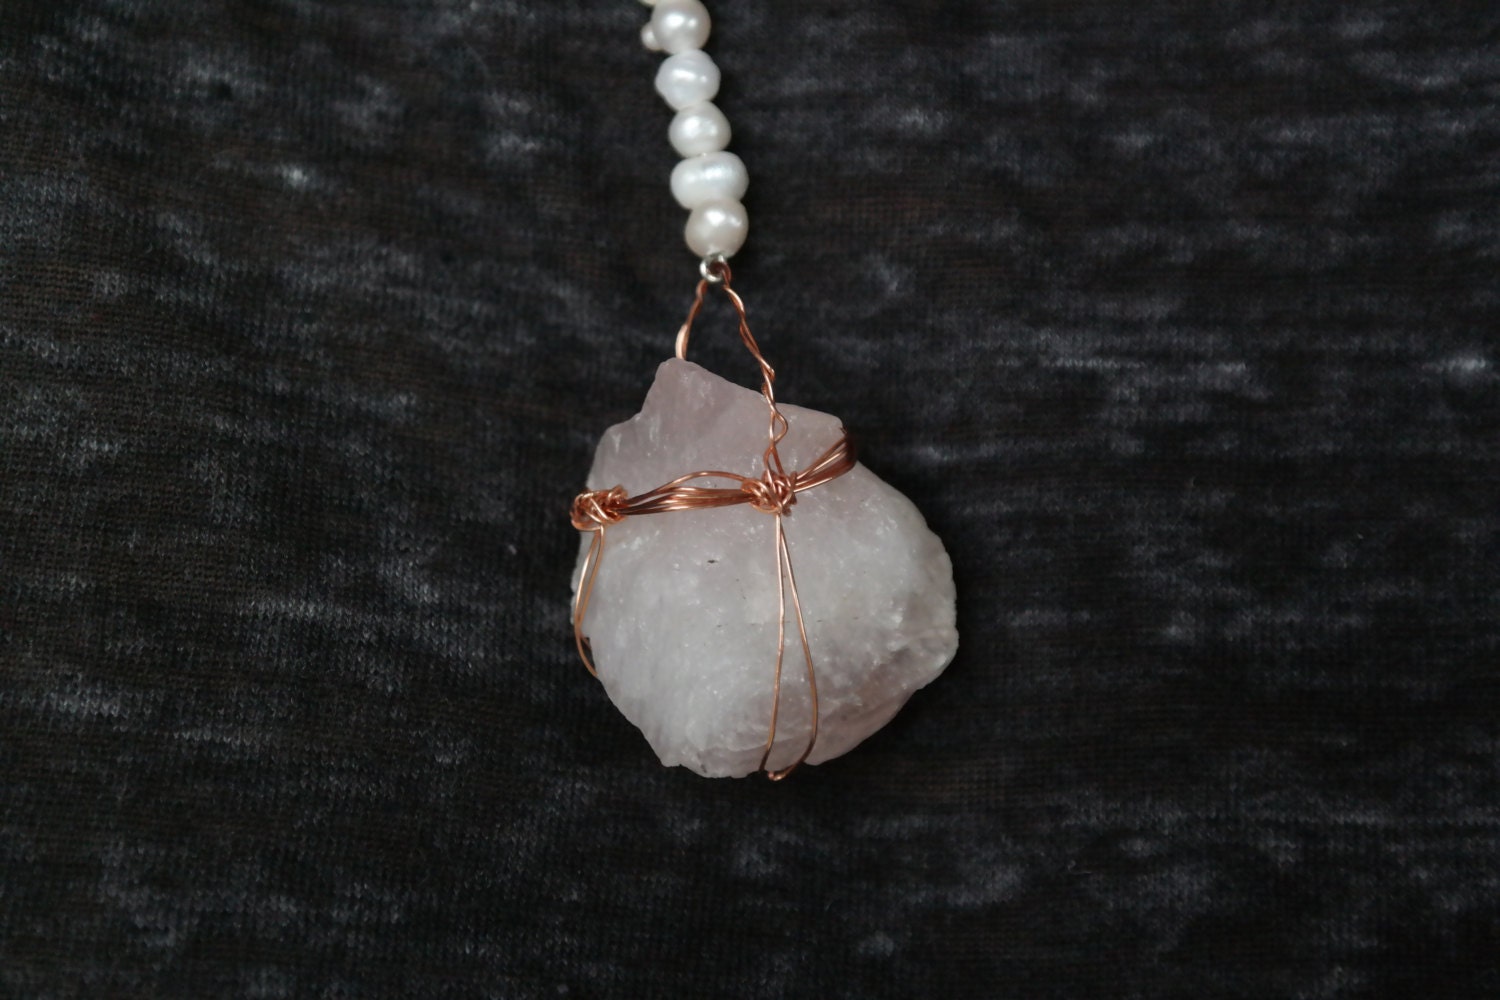 real rose quartz necklace